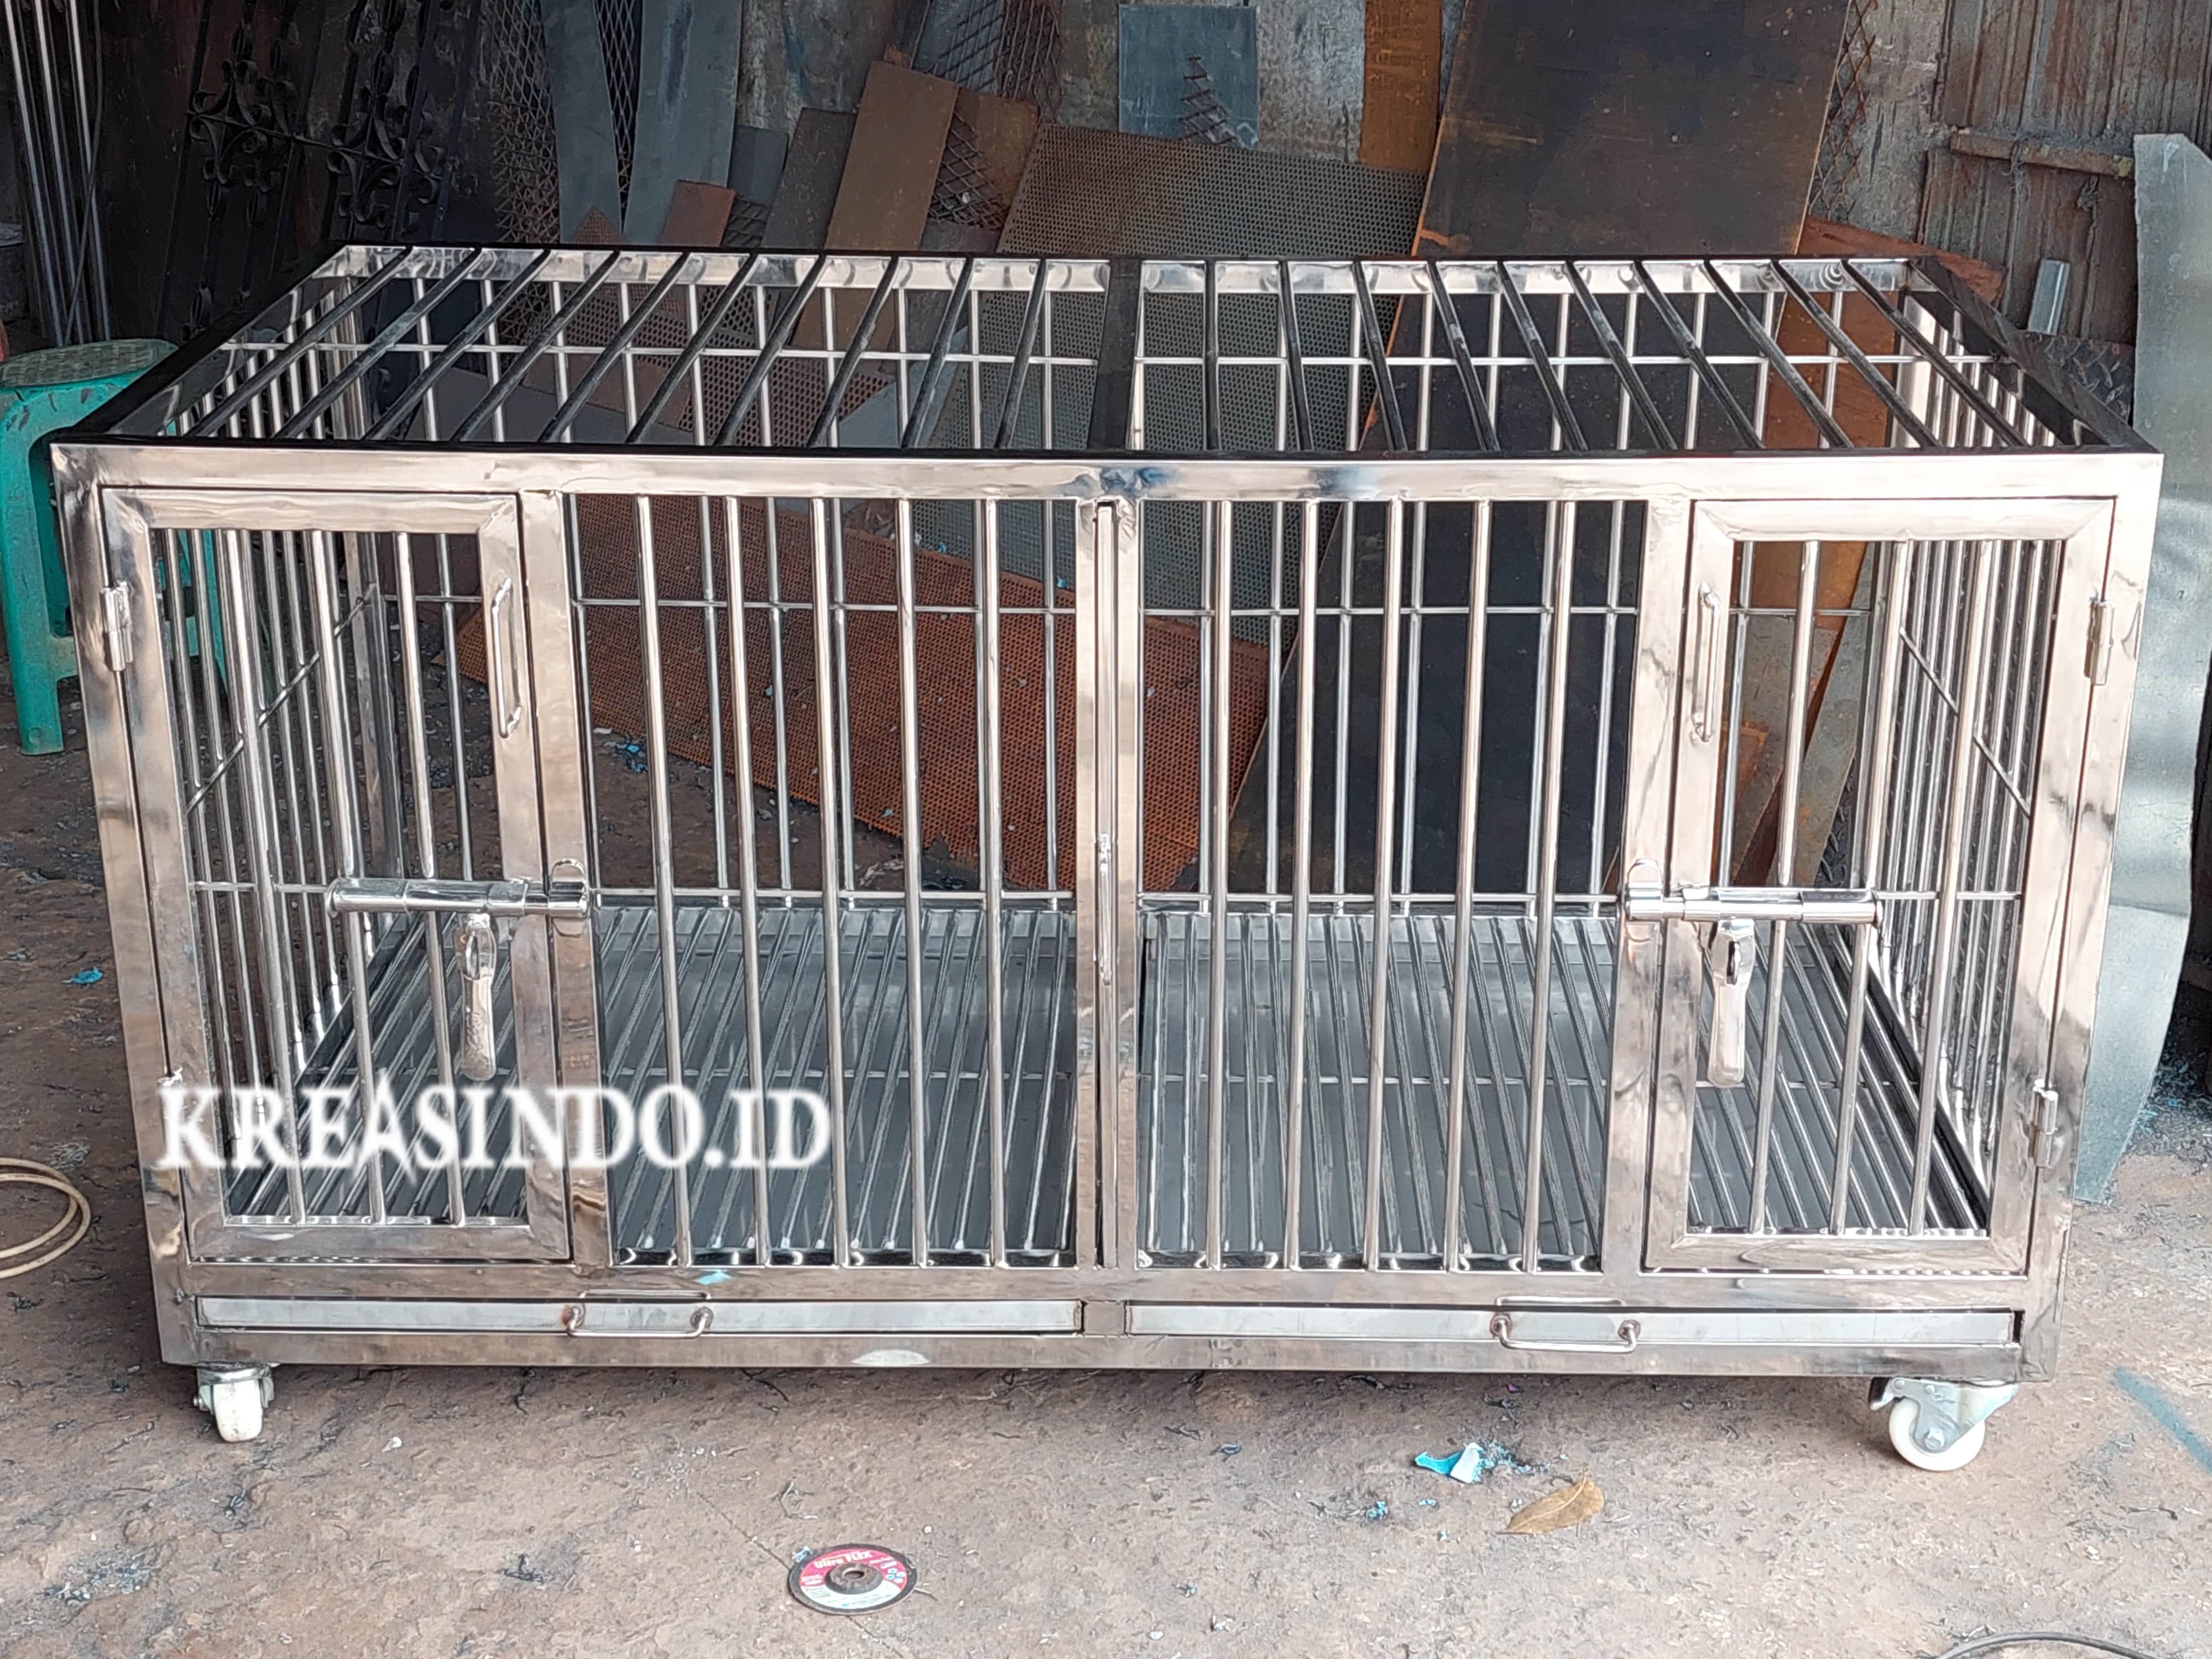 Kandang Anjing Bahan Stainless Pesanan Bpk Steve Andoko di Cakung Jakarta Timur